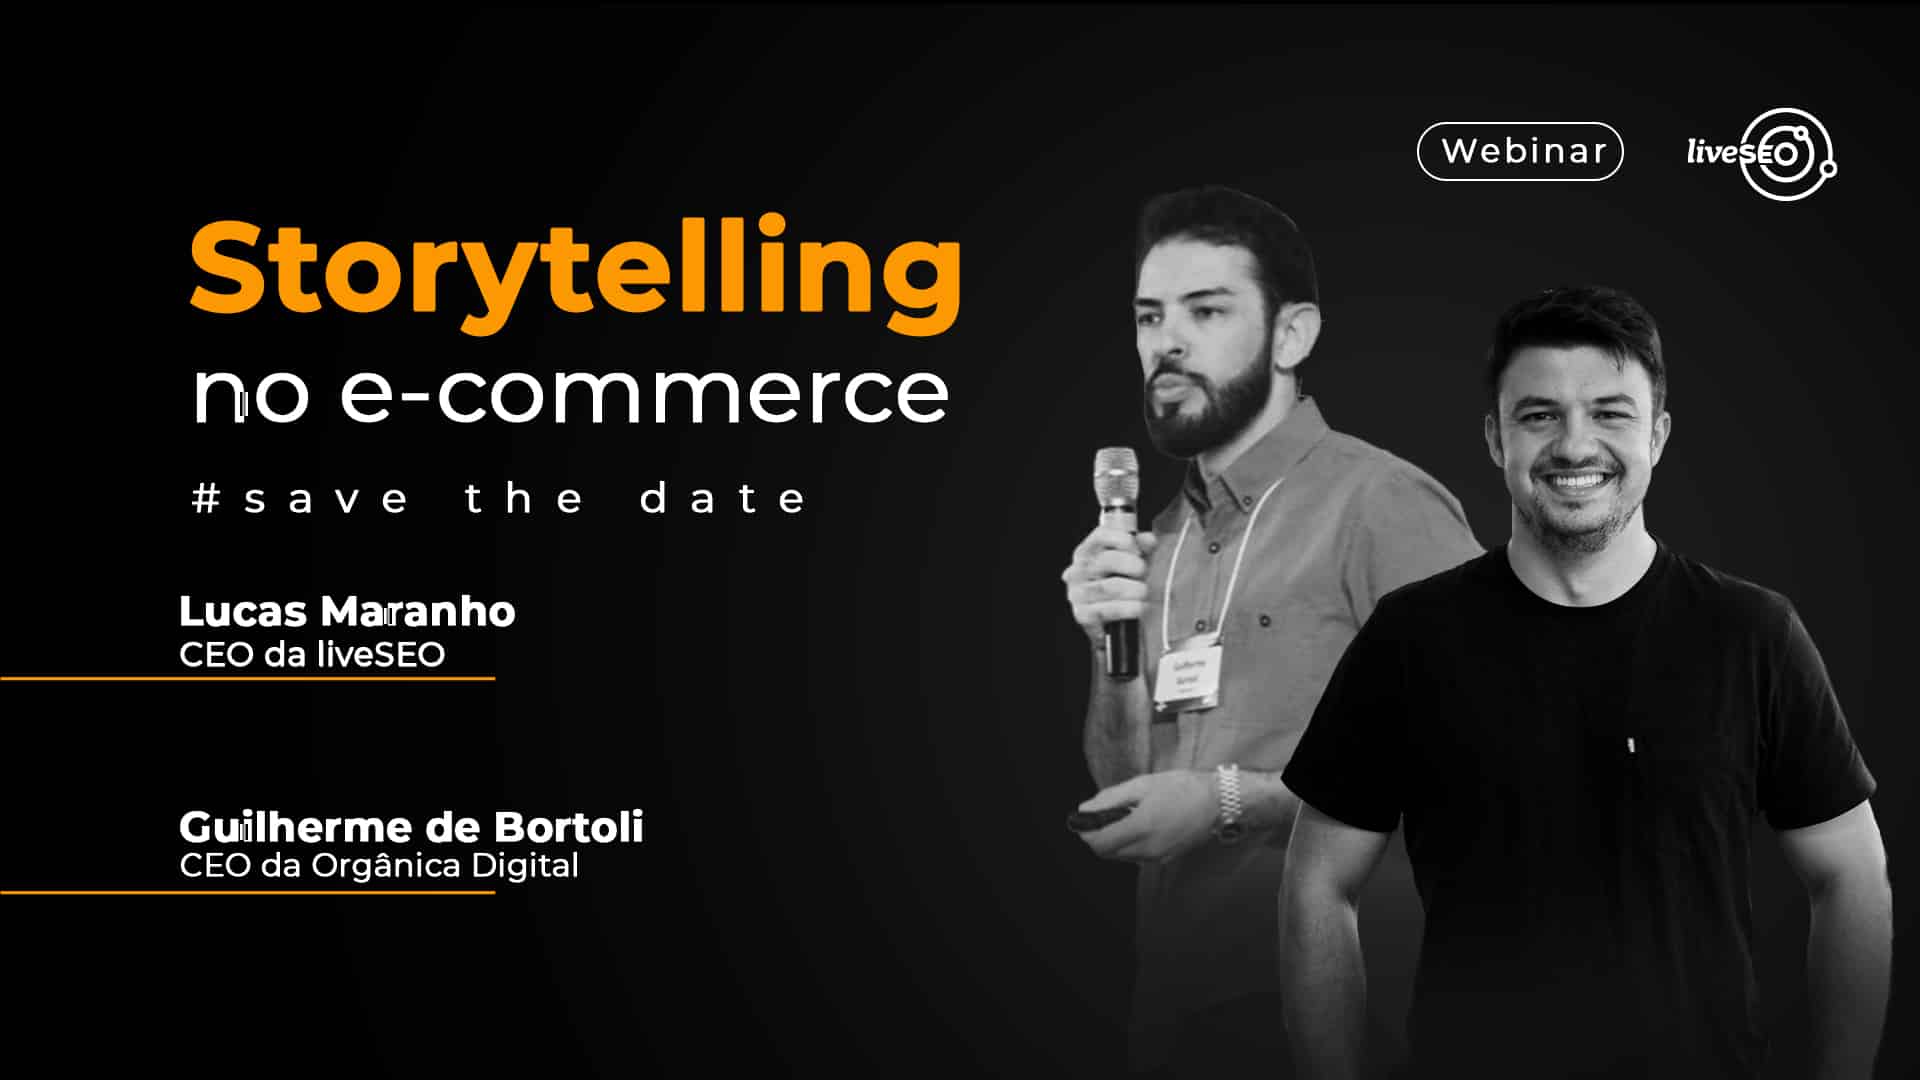 Capa do webinar "storytelling no e-commerce"